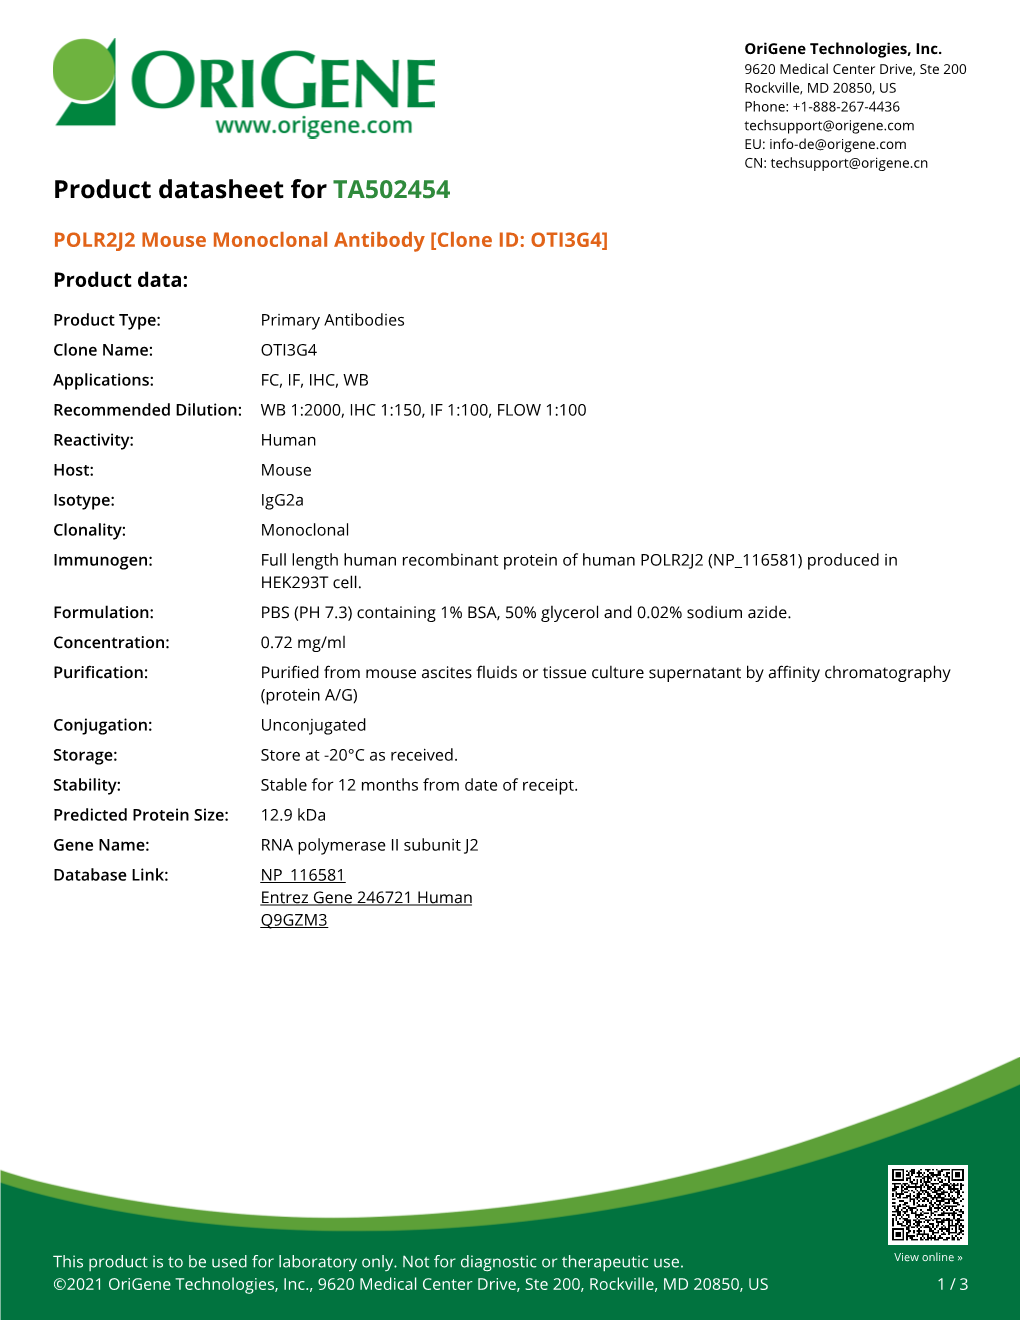 POLR2J2 Mouse Monoclonal Antibody [Clone ID: OTI3G4] Product Data